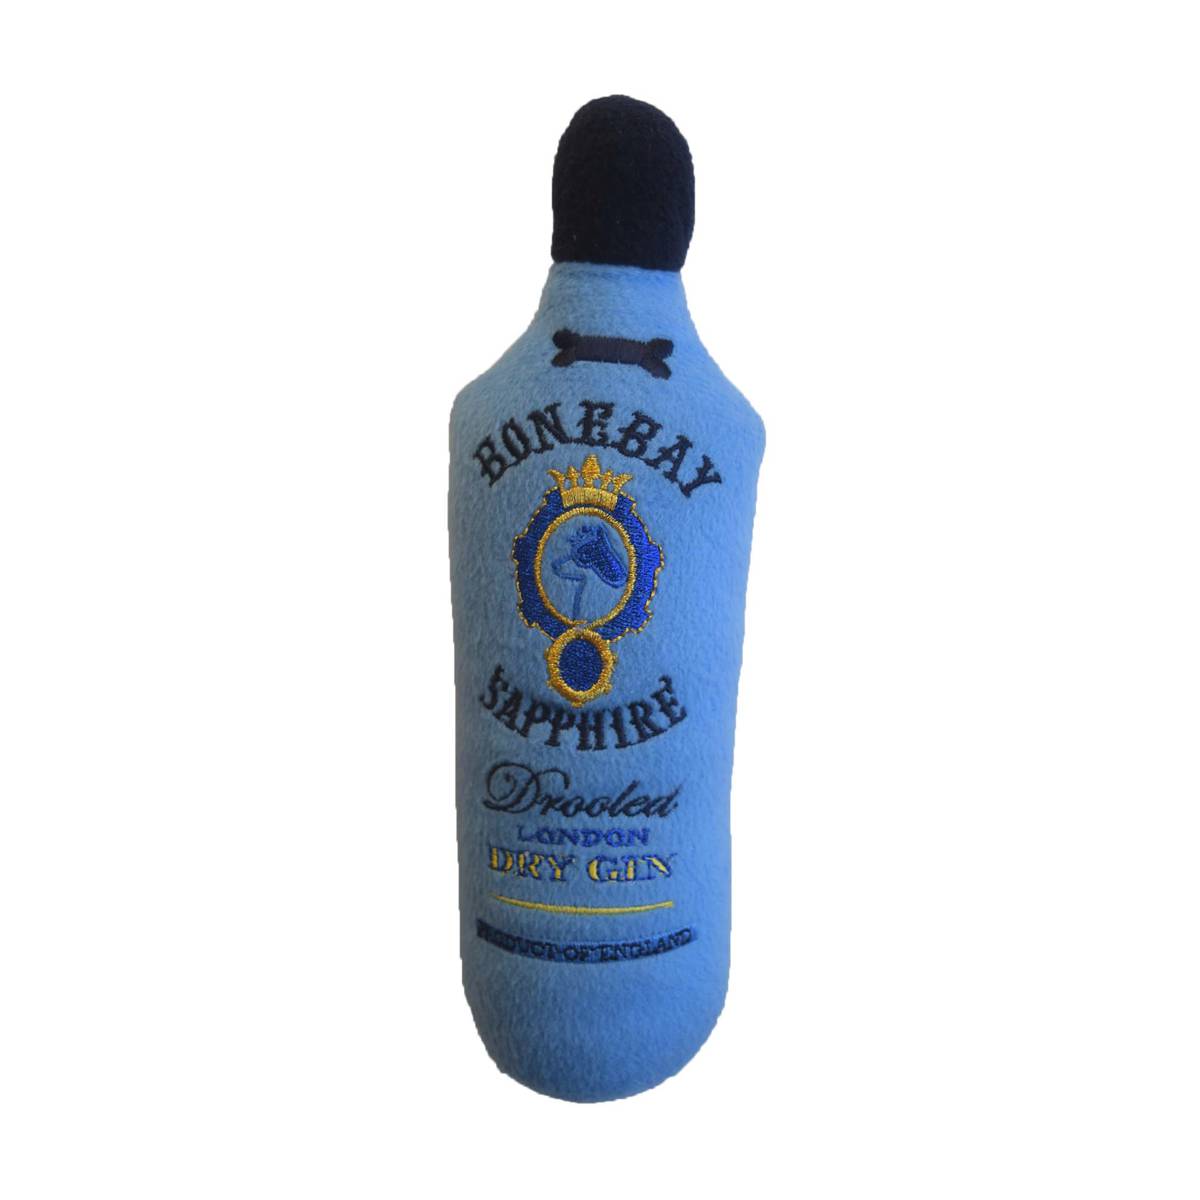 Bonebay Sapphire Gin Dog Toy | Pawlicious & Company